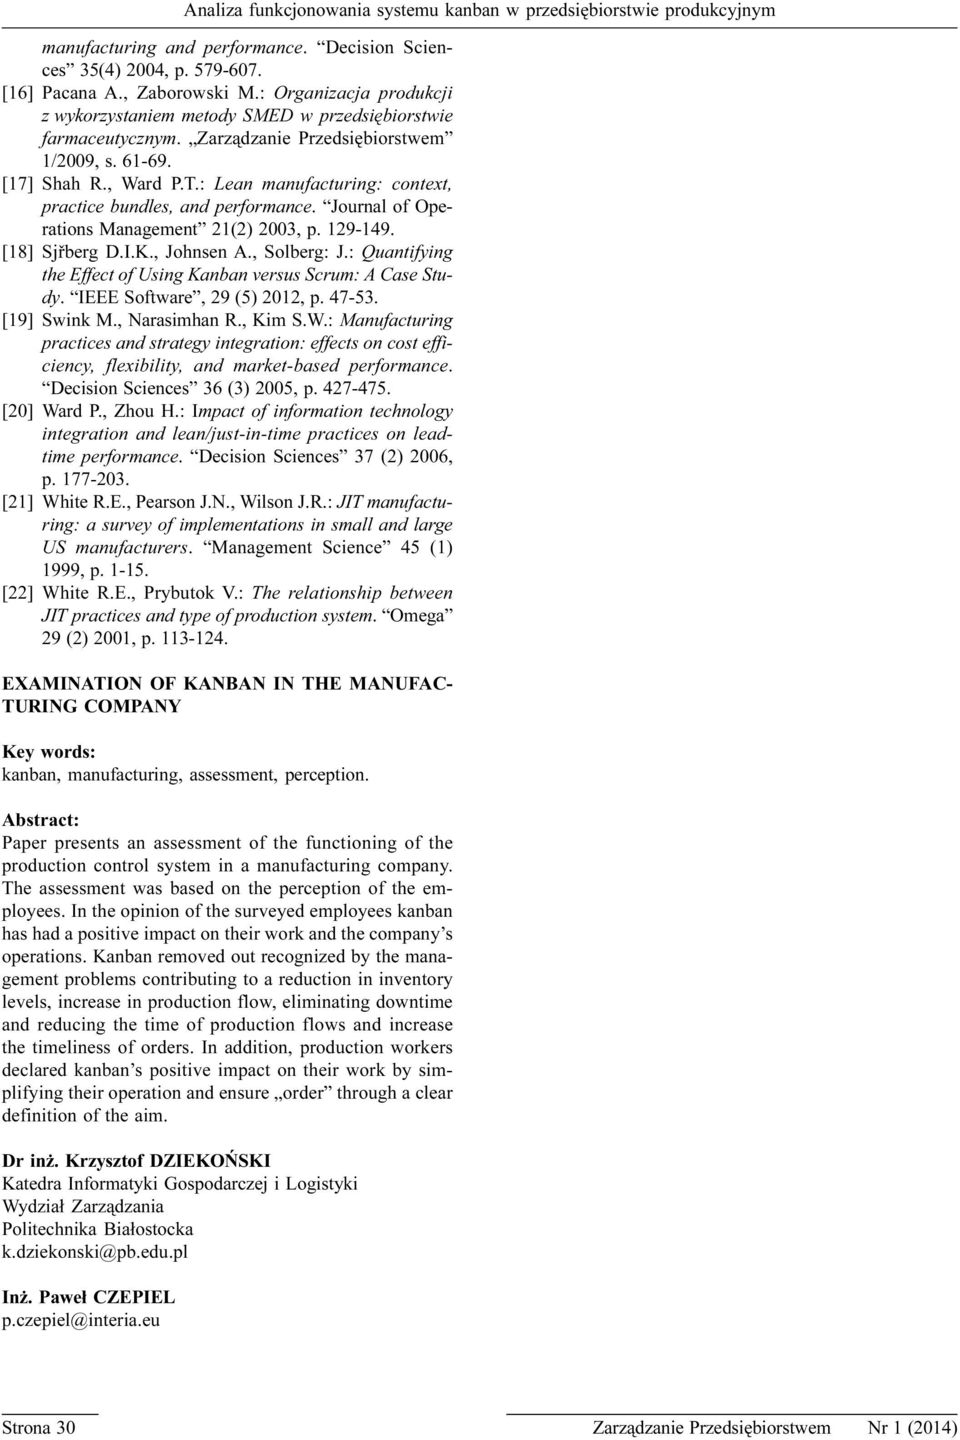 [18] Sjøberg D.I.K., Johnsen A., Solberg: J.: Quantifying the Effect of Using Kanban versus Scrum: A Case Study. IEEE Software, 29 (5) 2012, p. 47-53. [19] Swink M., Narasimhan R., Kim S.W.